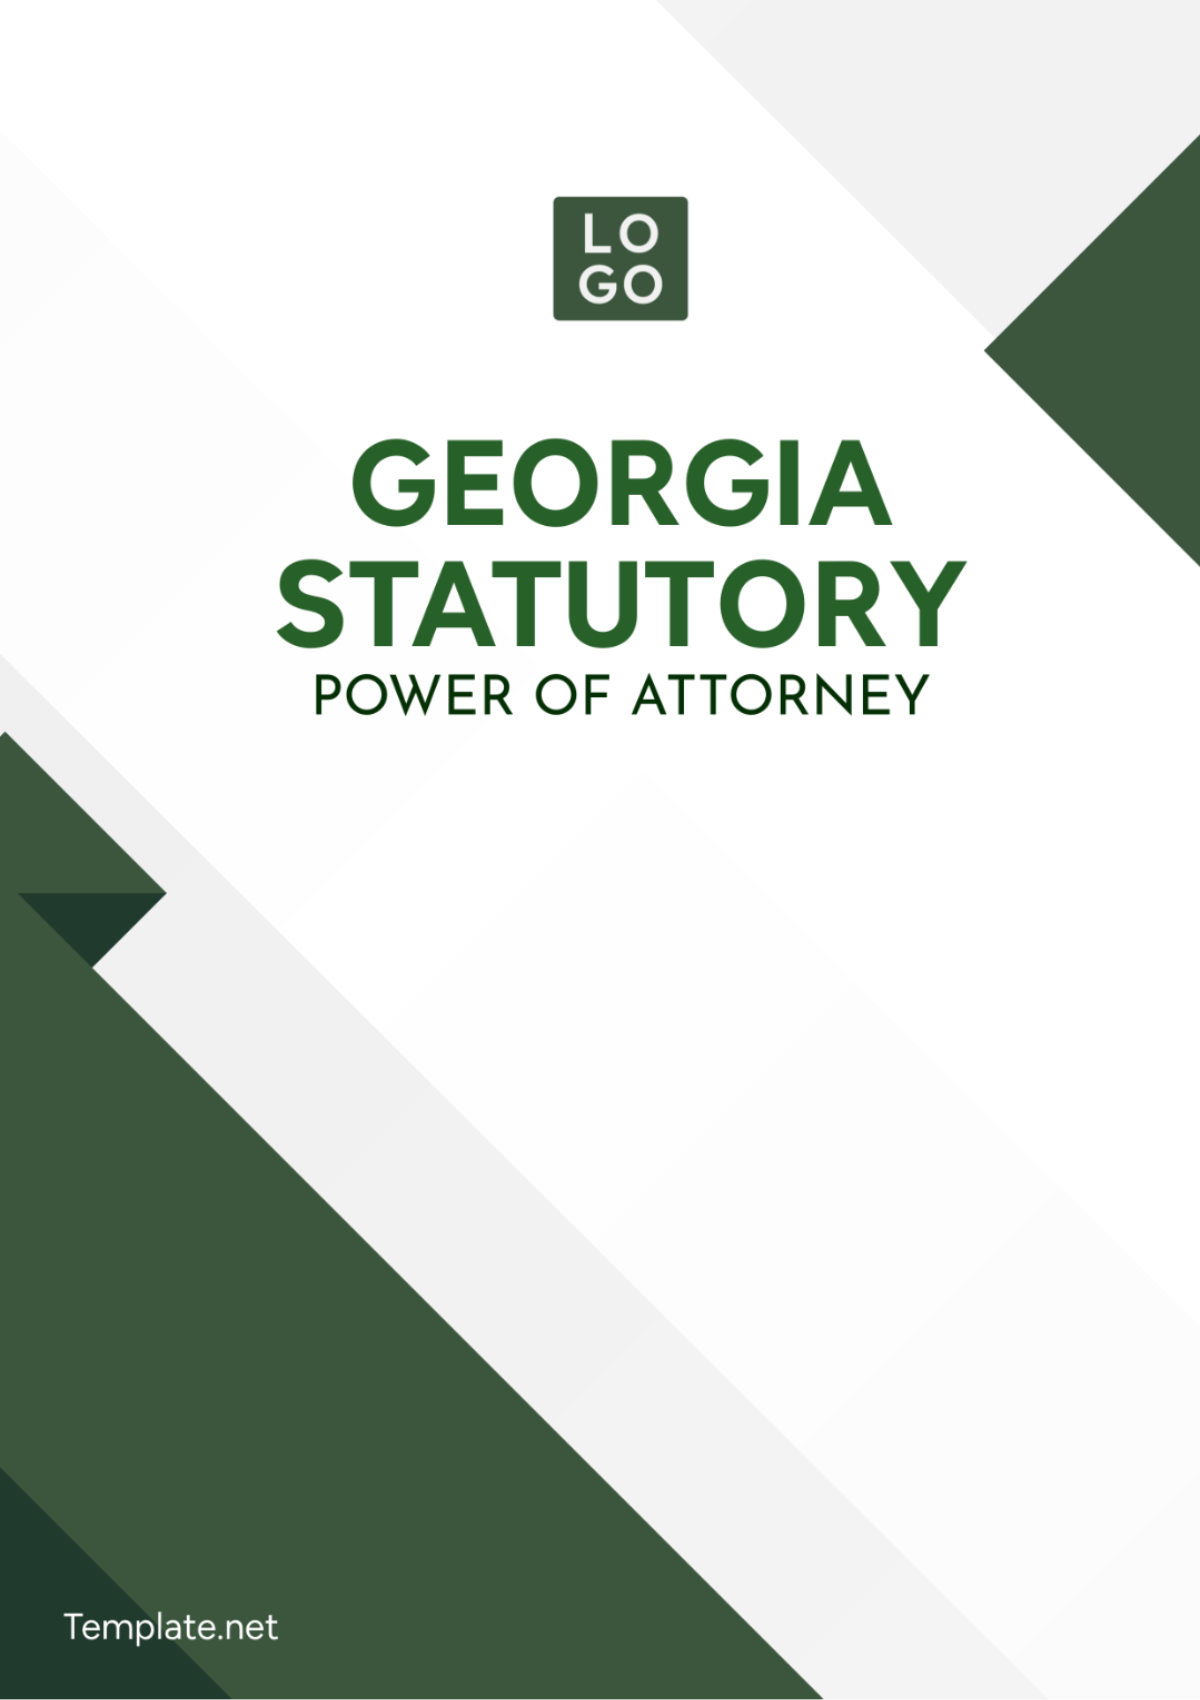 Georgia Statutory Power of Attorney Template